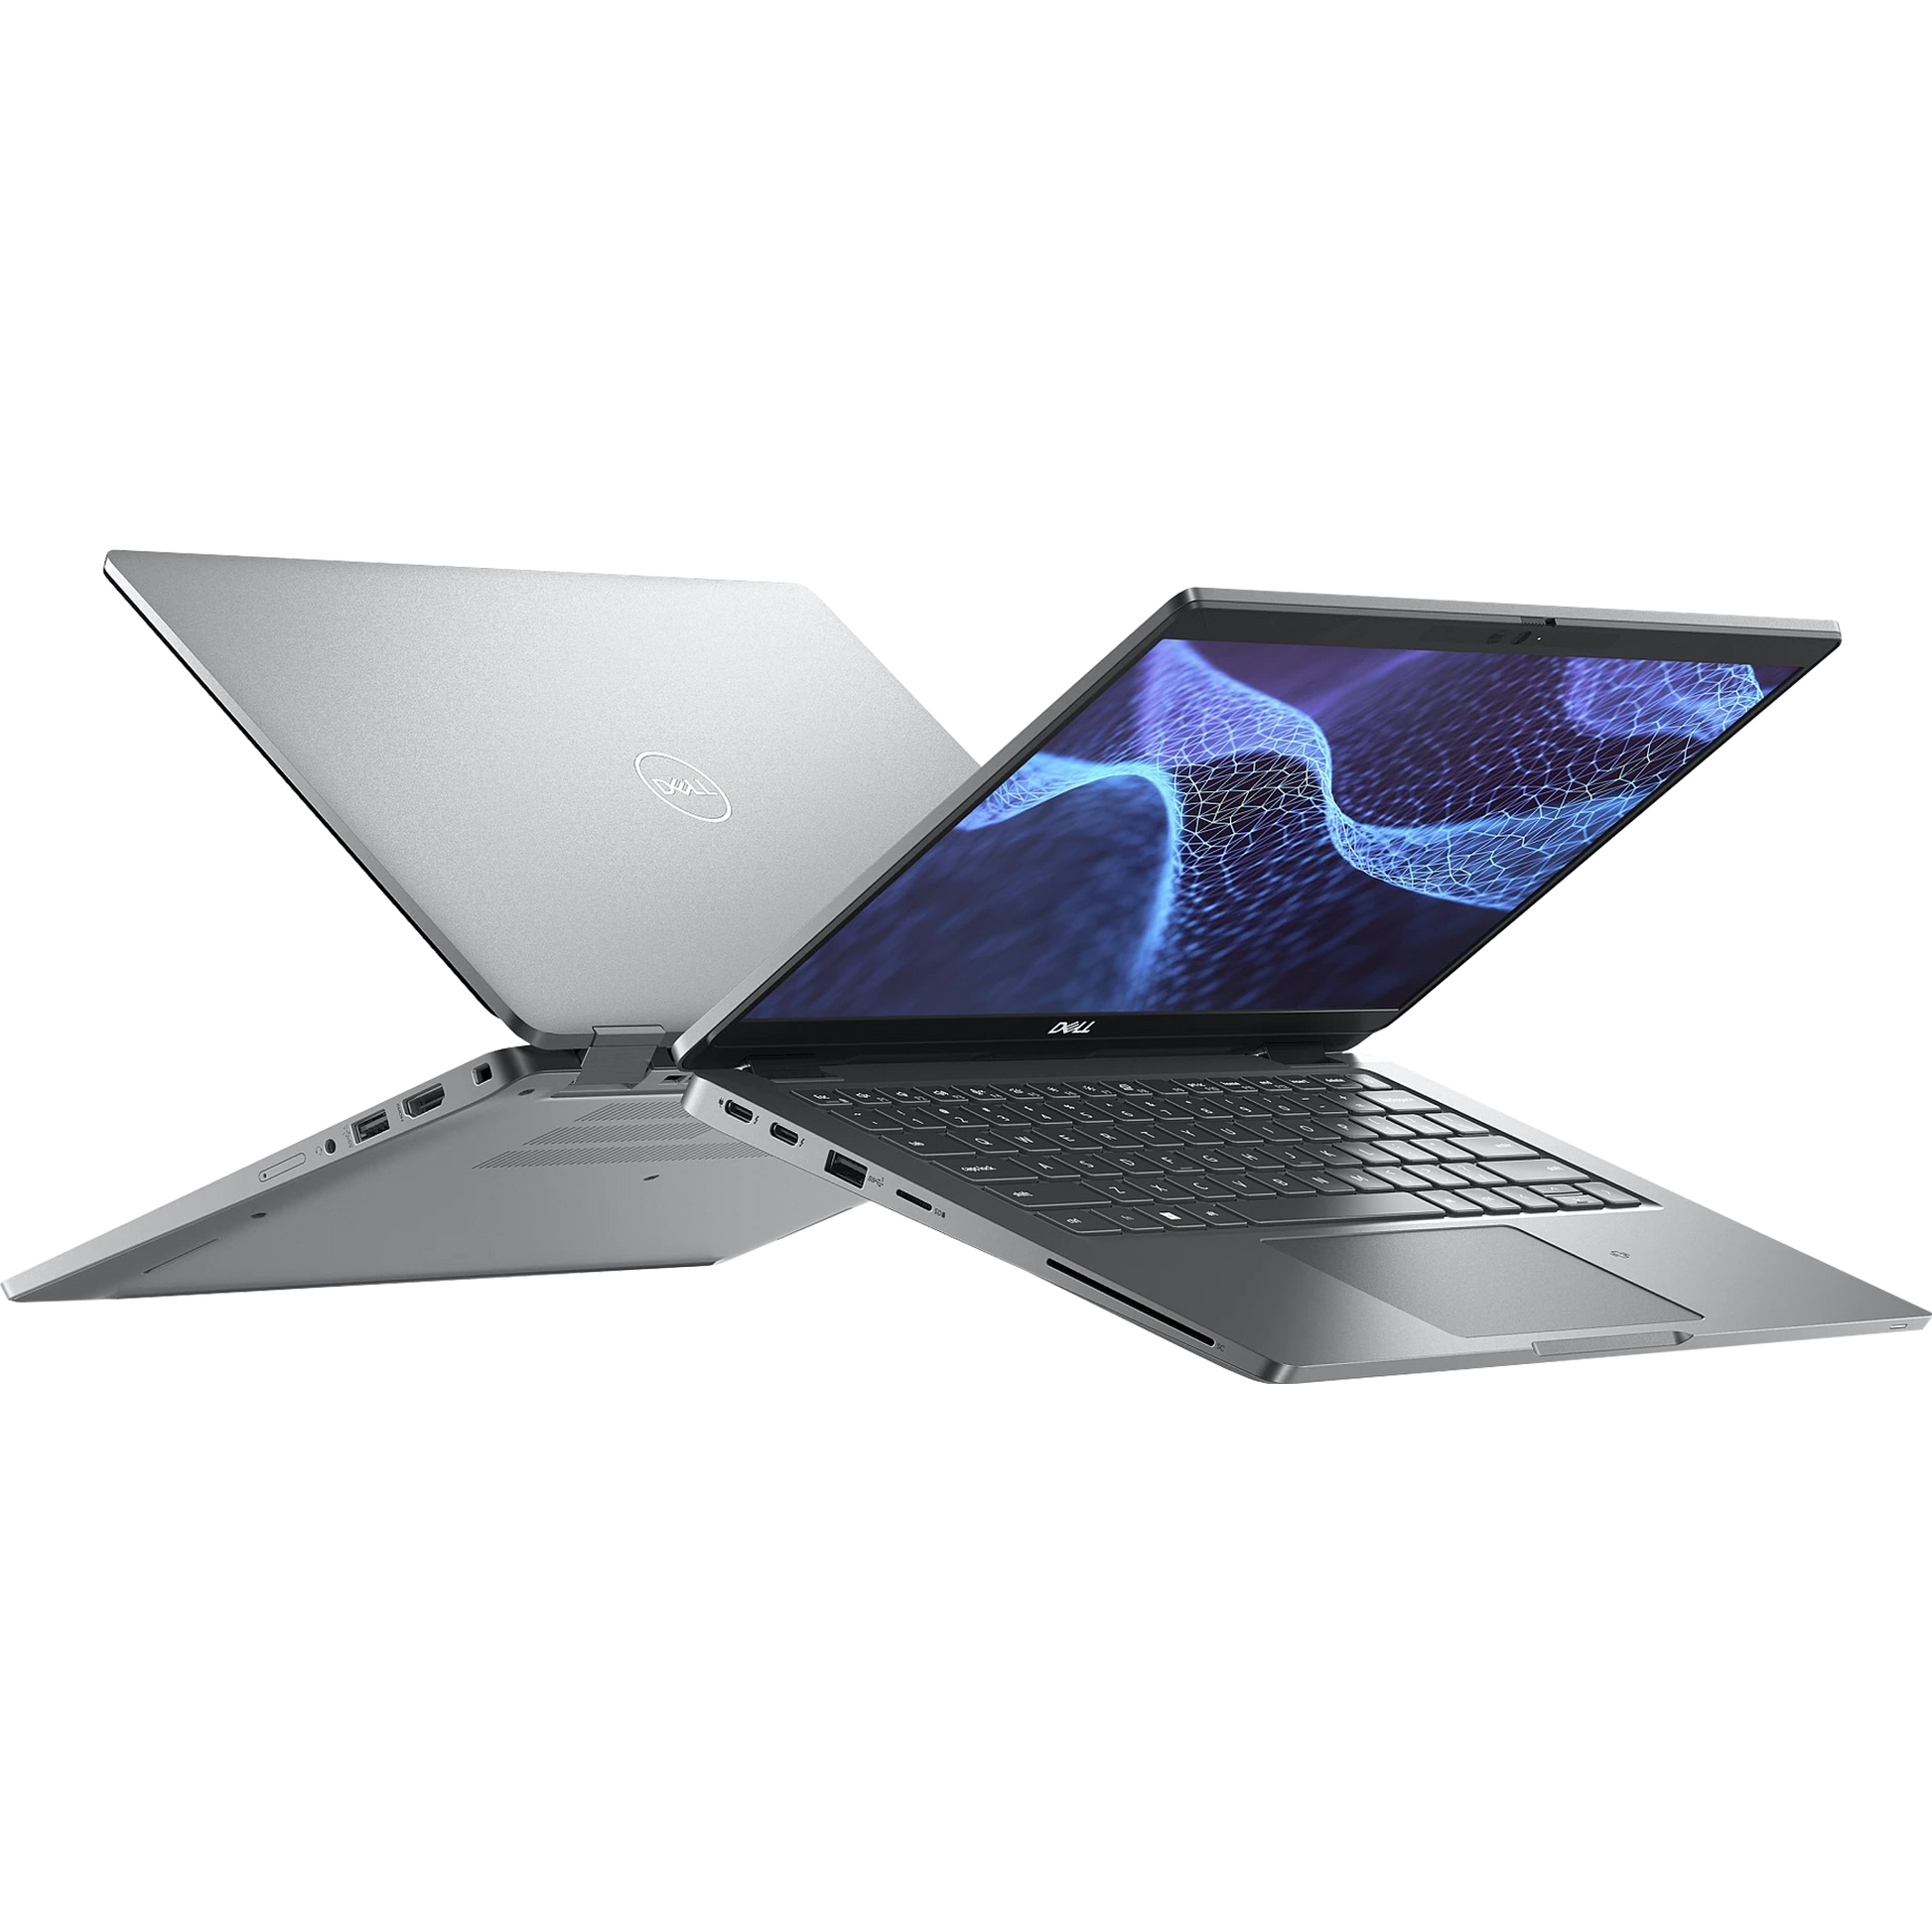 Dell Latitude 5530 Intel i7, 12th Gen Laptop with 32GB Ram + GPU Laptops - Refurbished